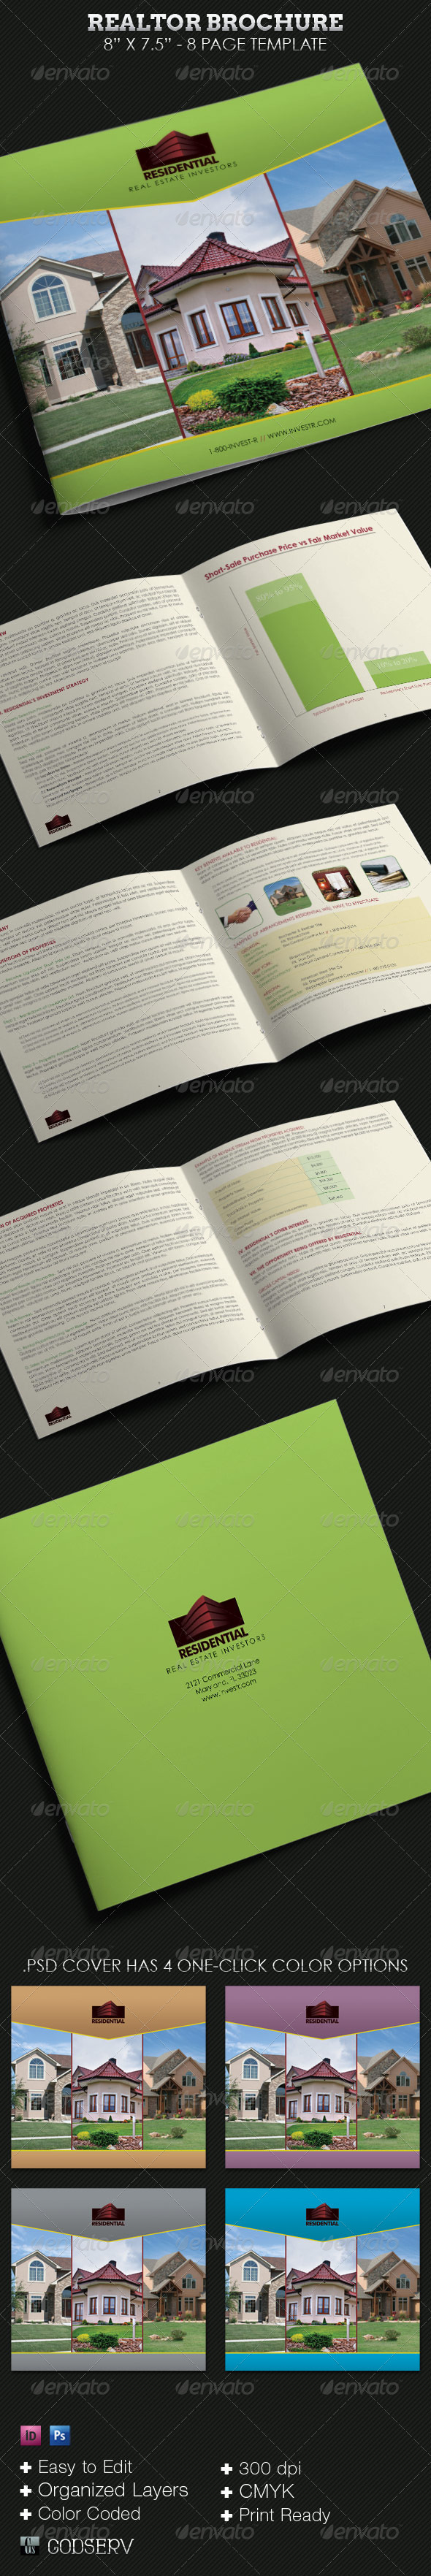 Realtor-Brochure-Template-Preview